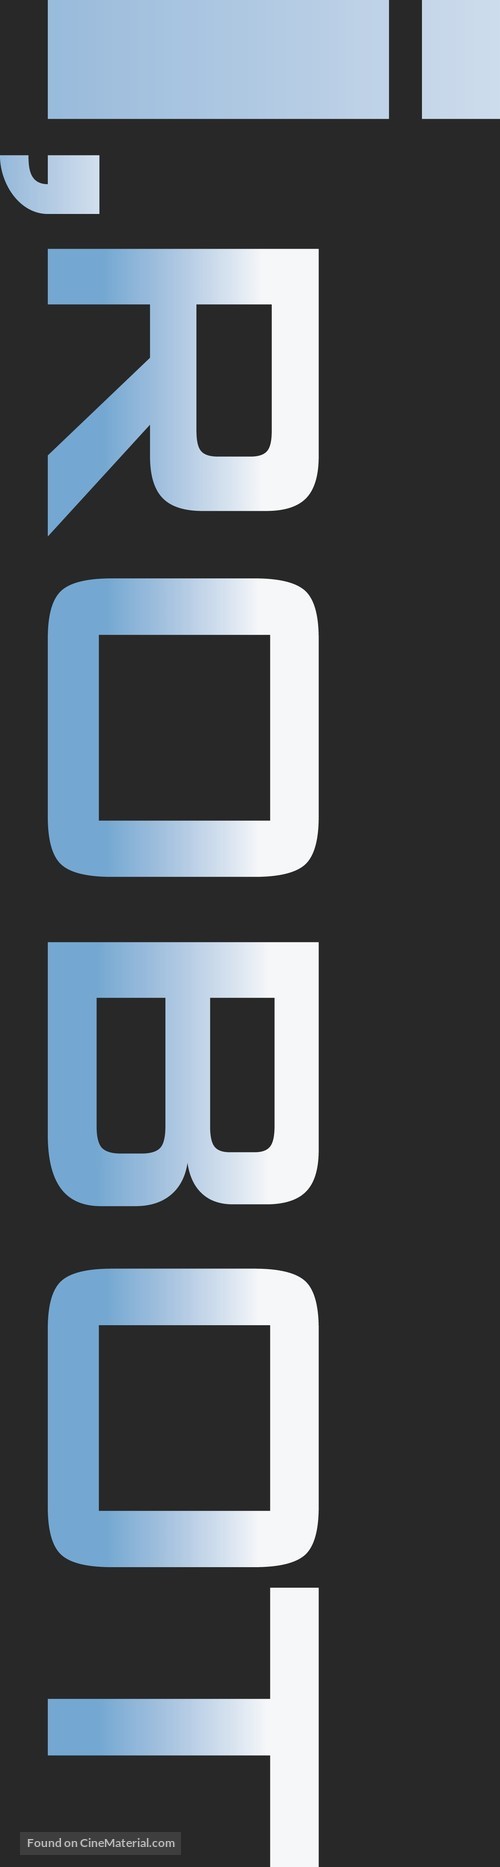 I, Robot - Logo